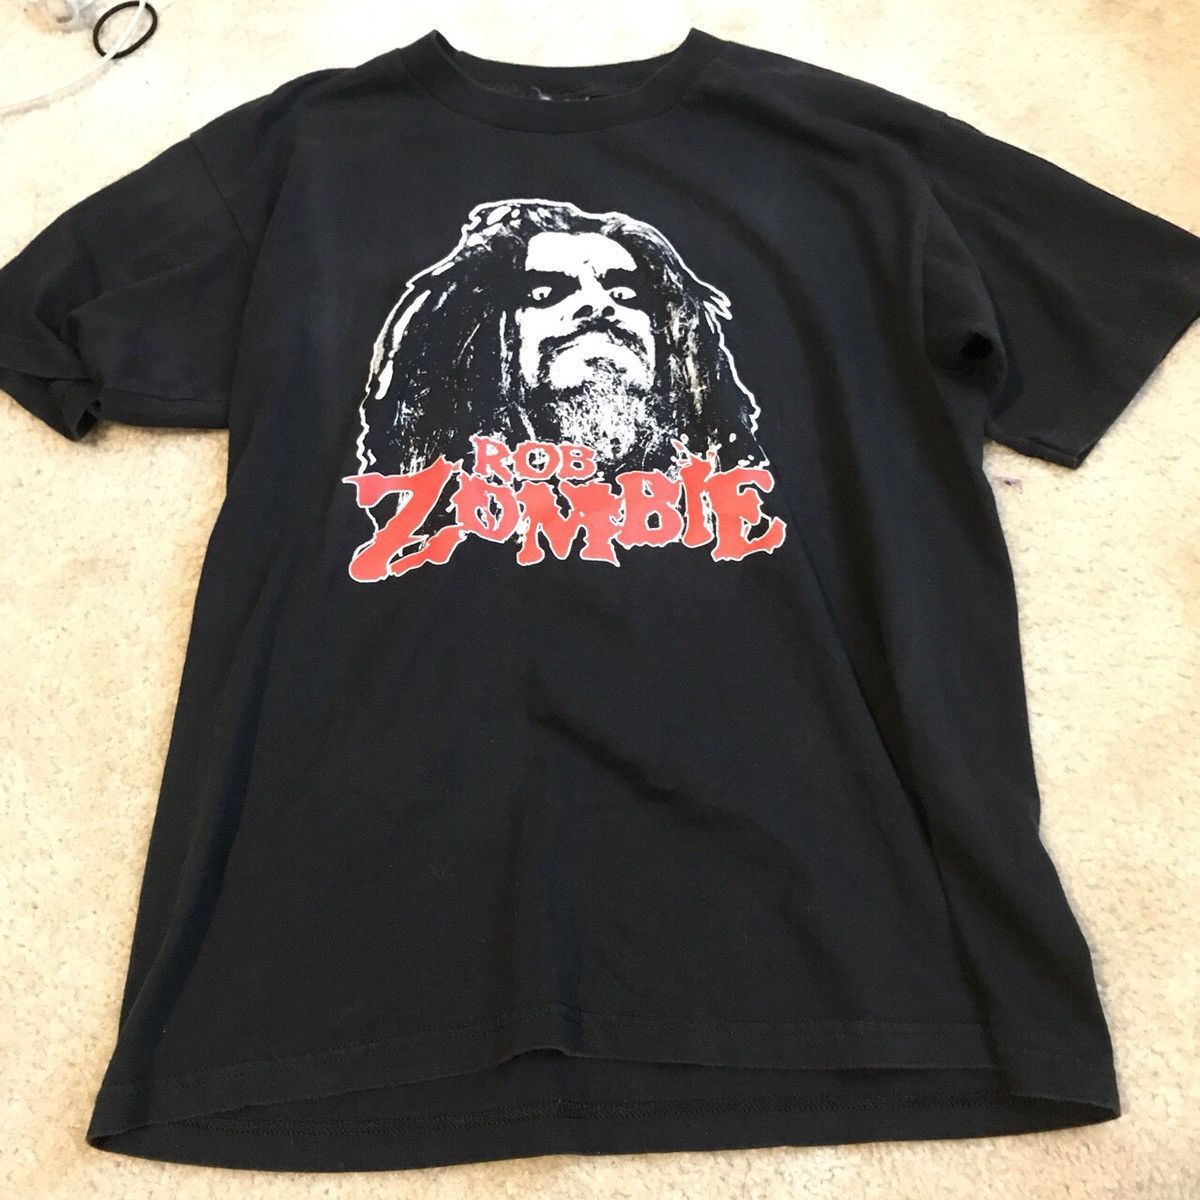 Band Tees Rob Zombie T Shirt Size L Size US L / EU 52-54 / 3 - 1 Preview